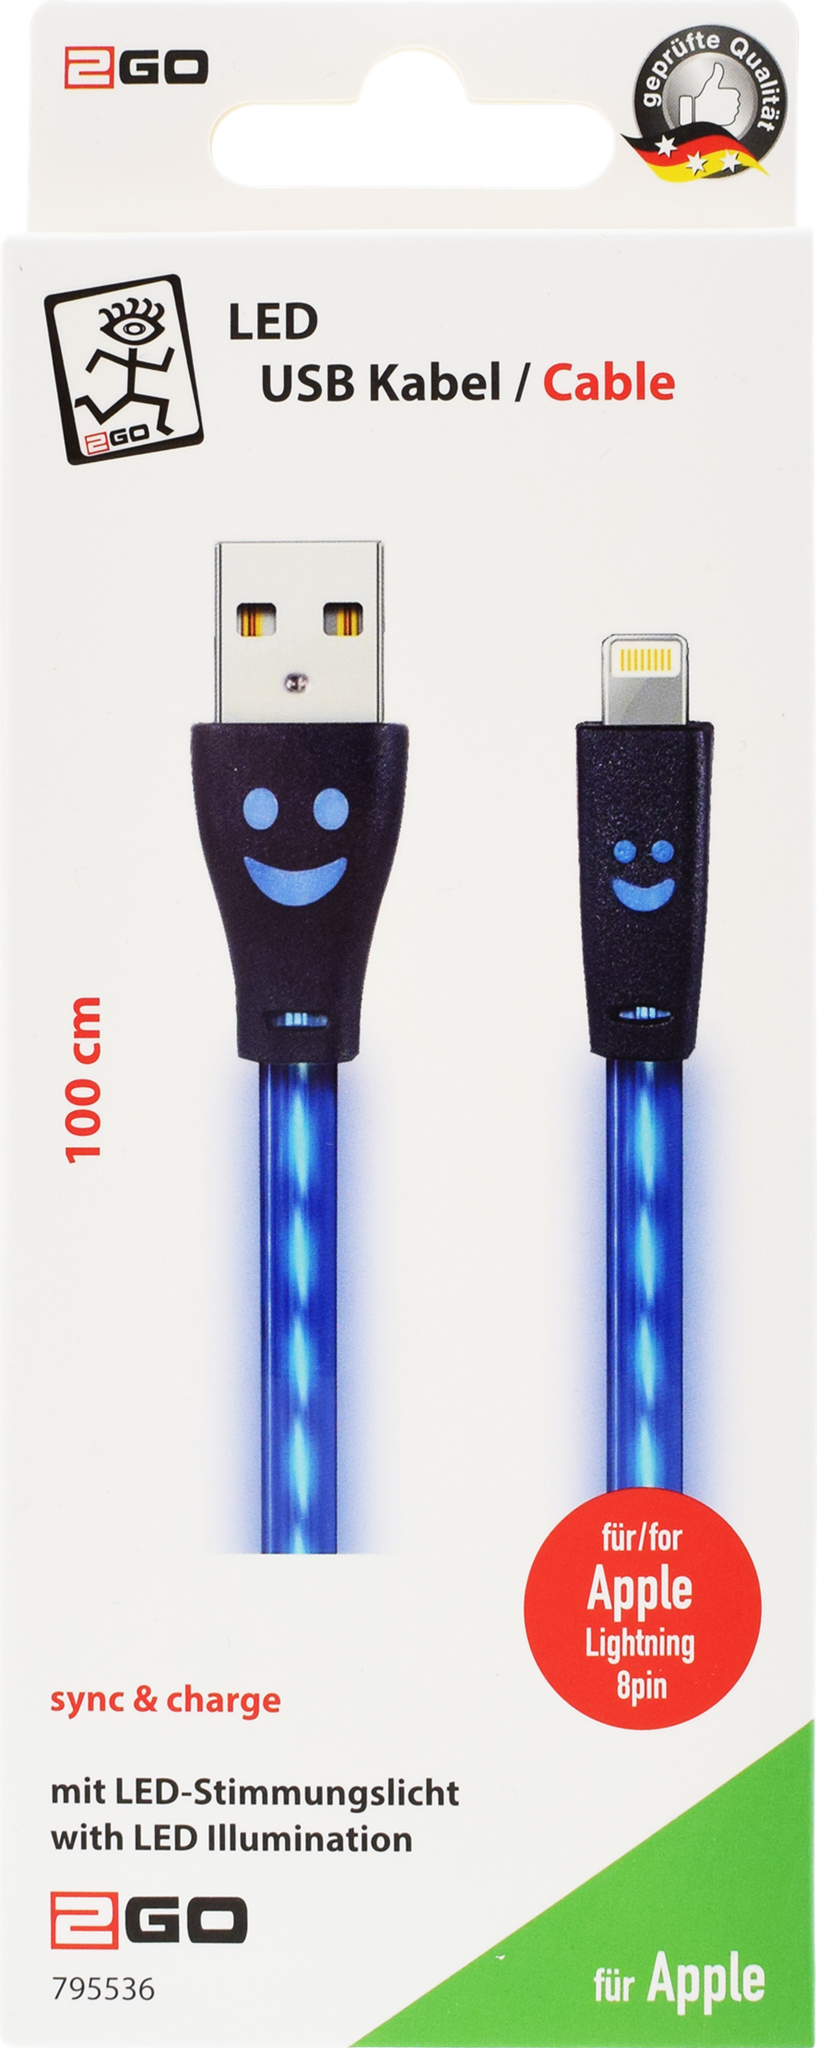 2GO-Mobile.net -B2B-. 2GO USB-datacable LED, blue, for iPhone 5